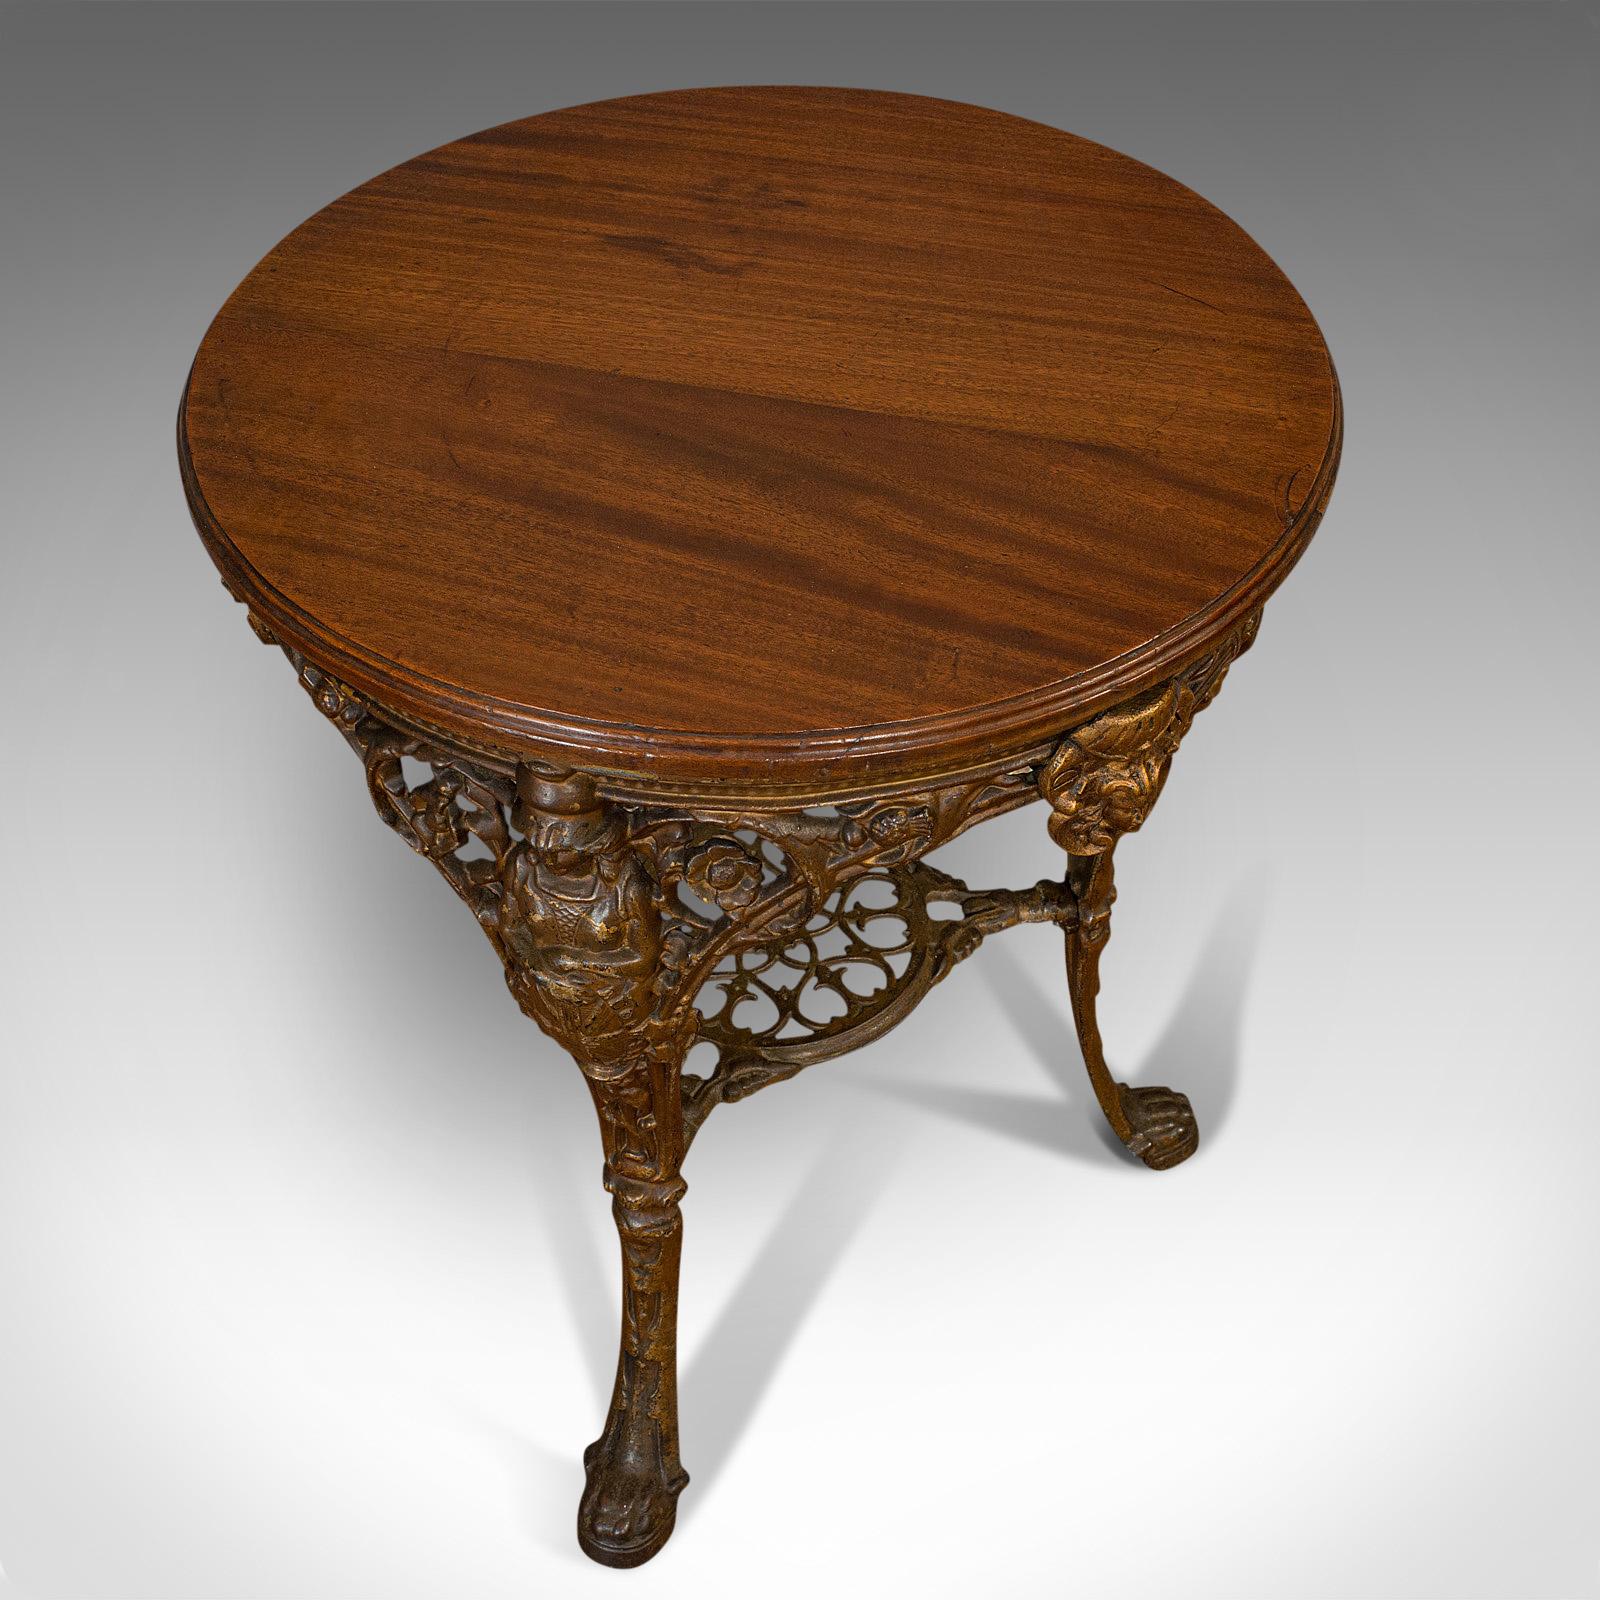 19th Century Antique Britannia Table, English, Mahogany, Outdoor, Garden, Biclam Foundry